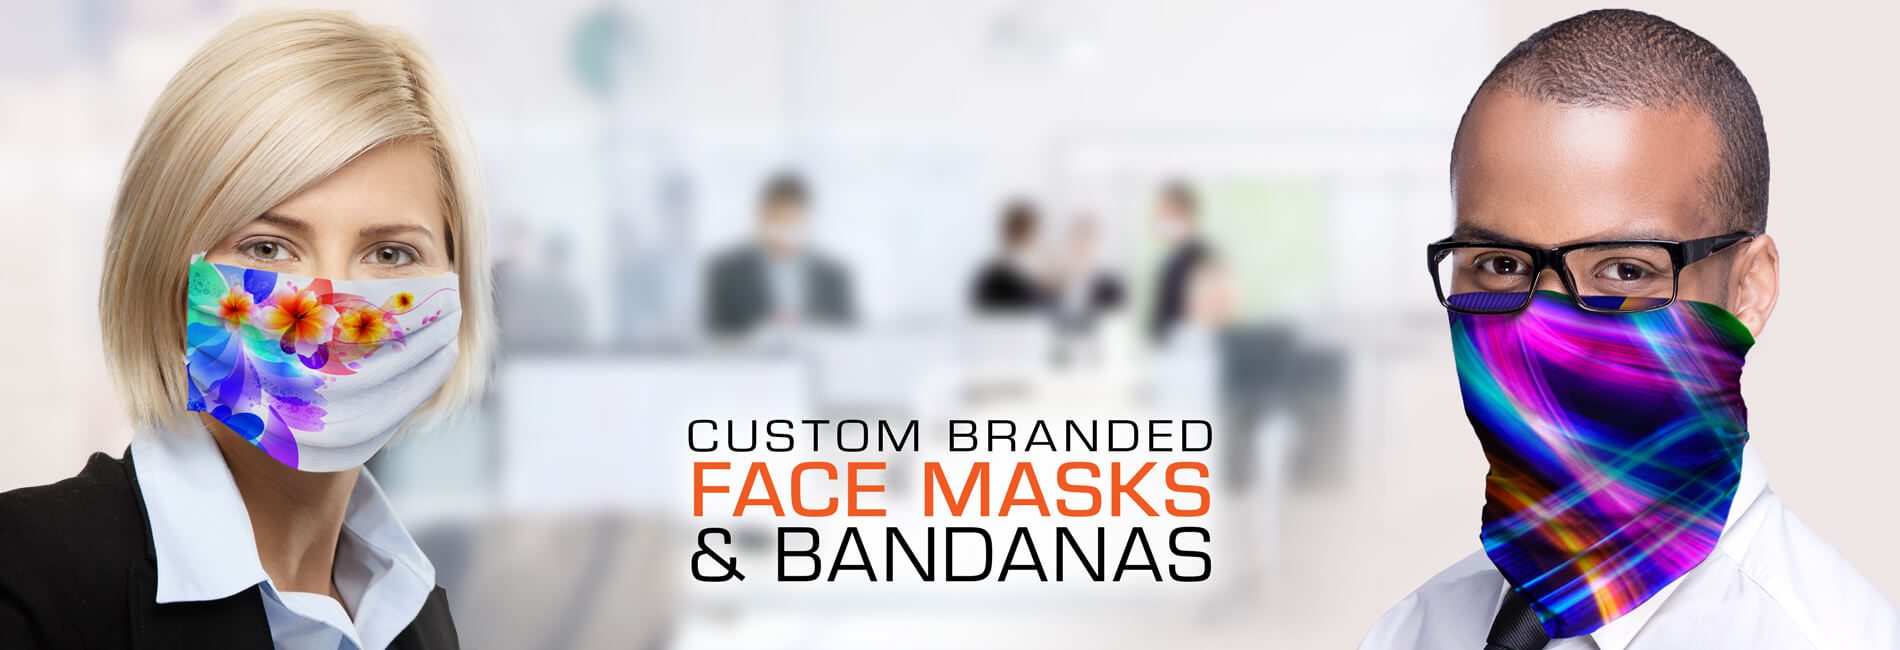 Custom Branded Face Masks and Bandanas